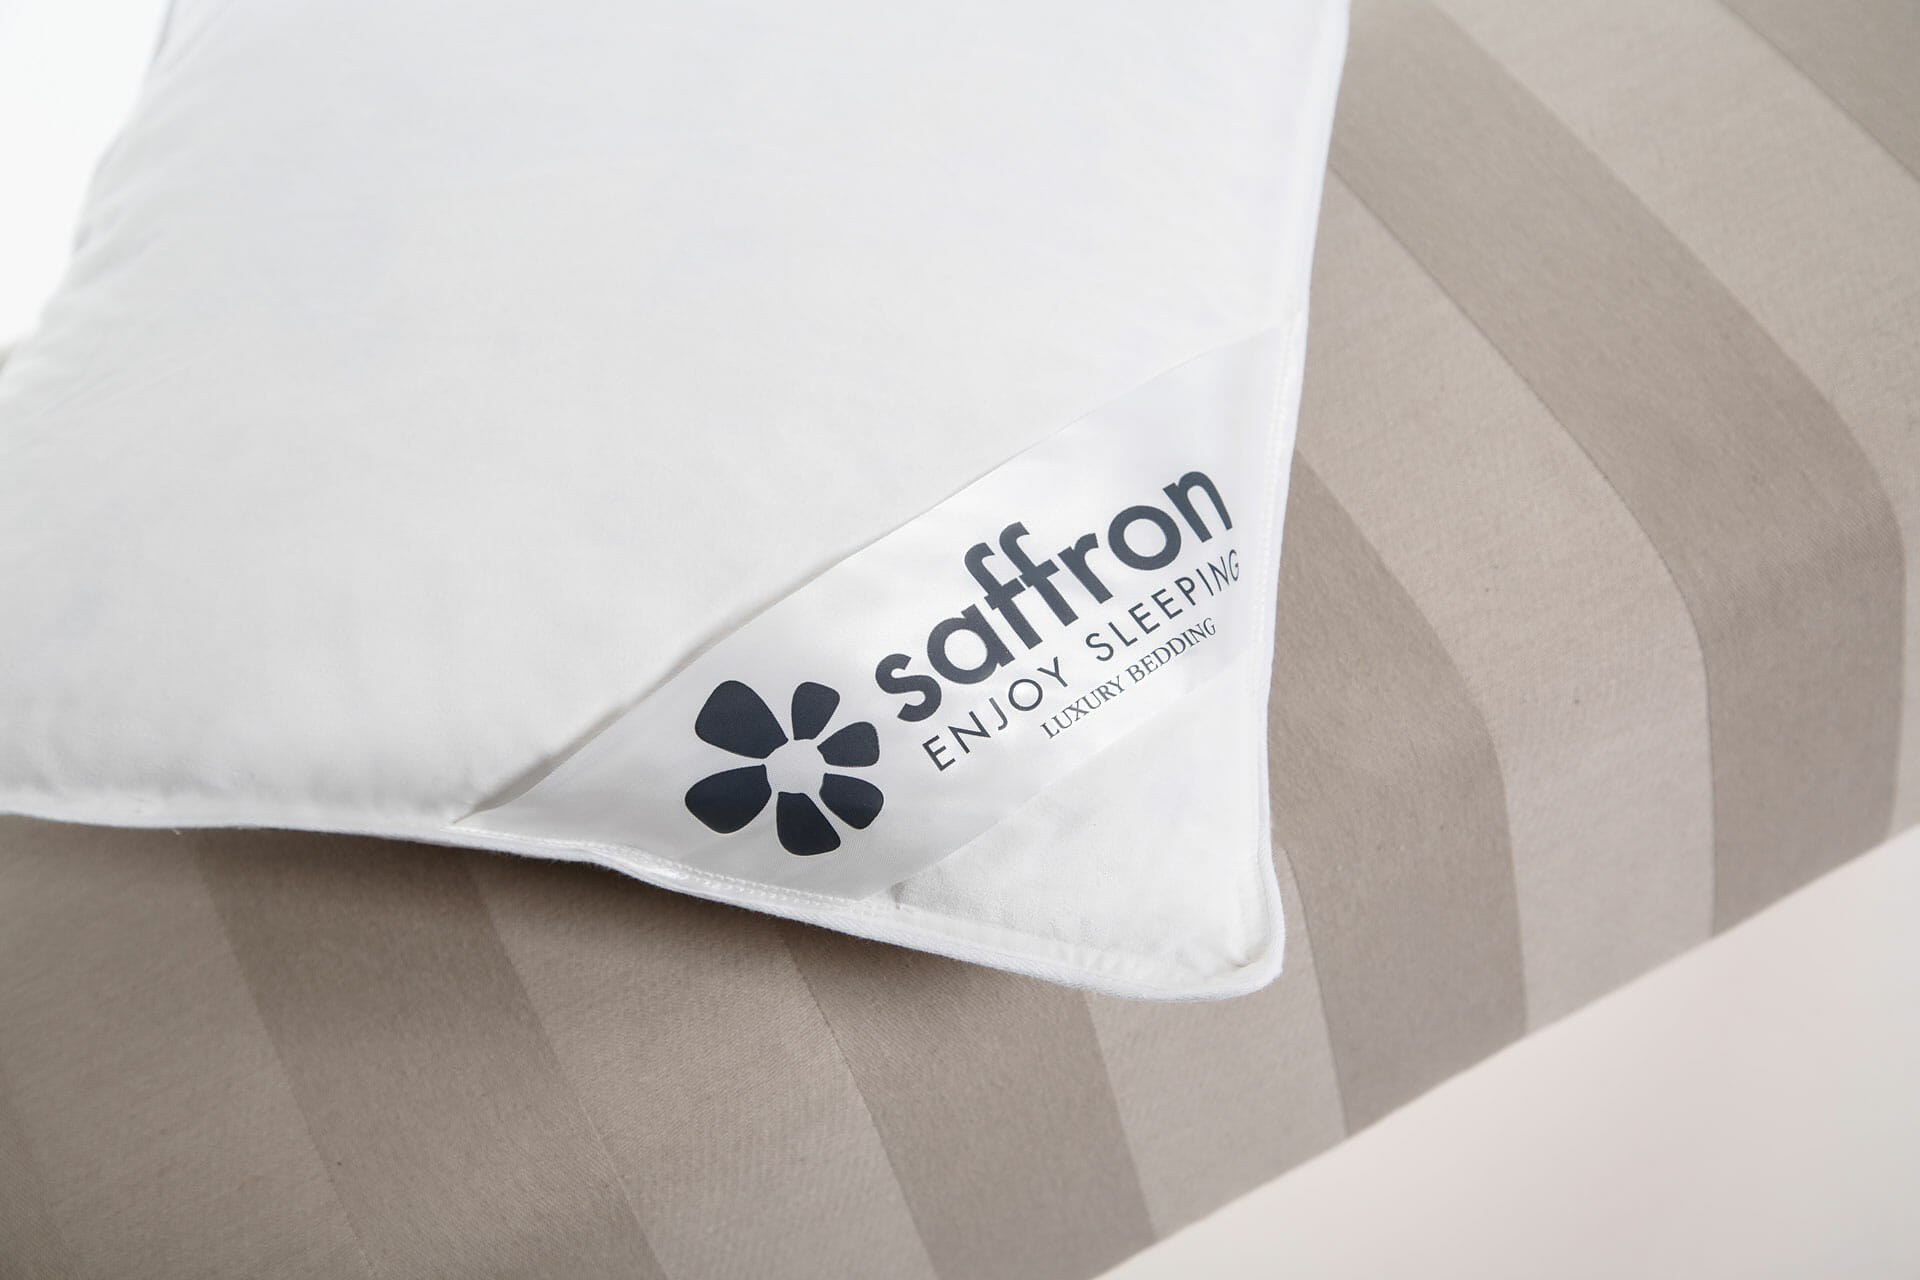 Saffron beds - Pillow on fabric